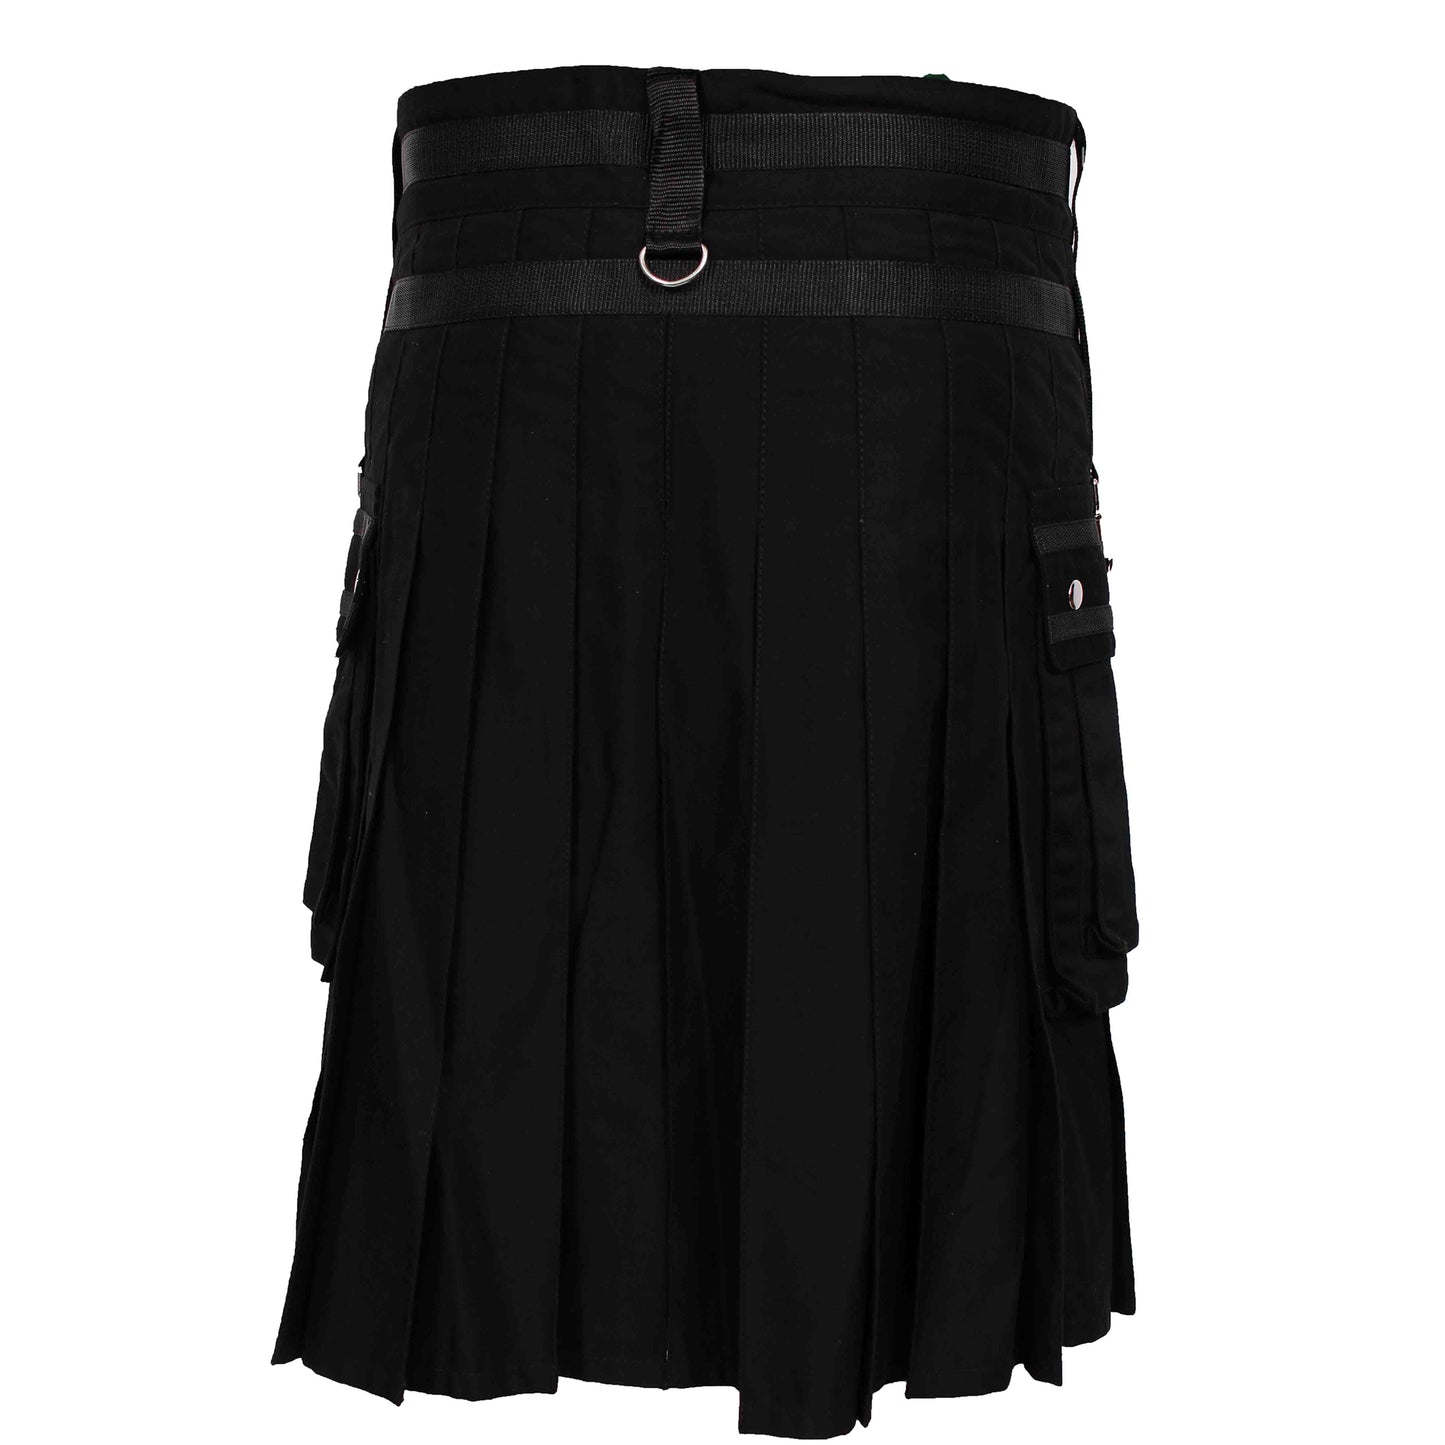 TRUESAGA - Black Deluxe Utility Fashion Kilt with Chain 100% Cotton 16-oz